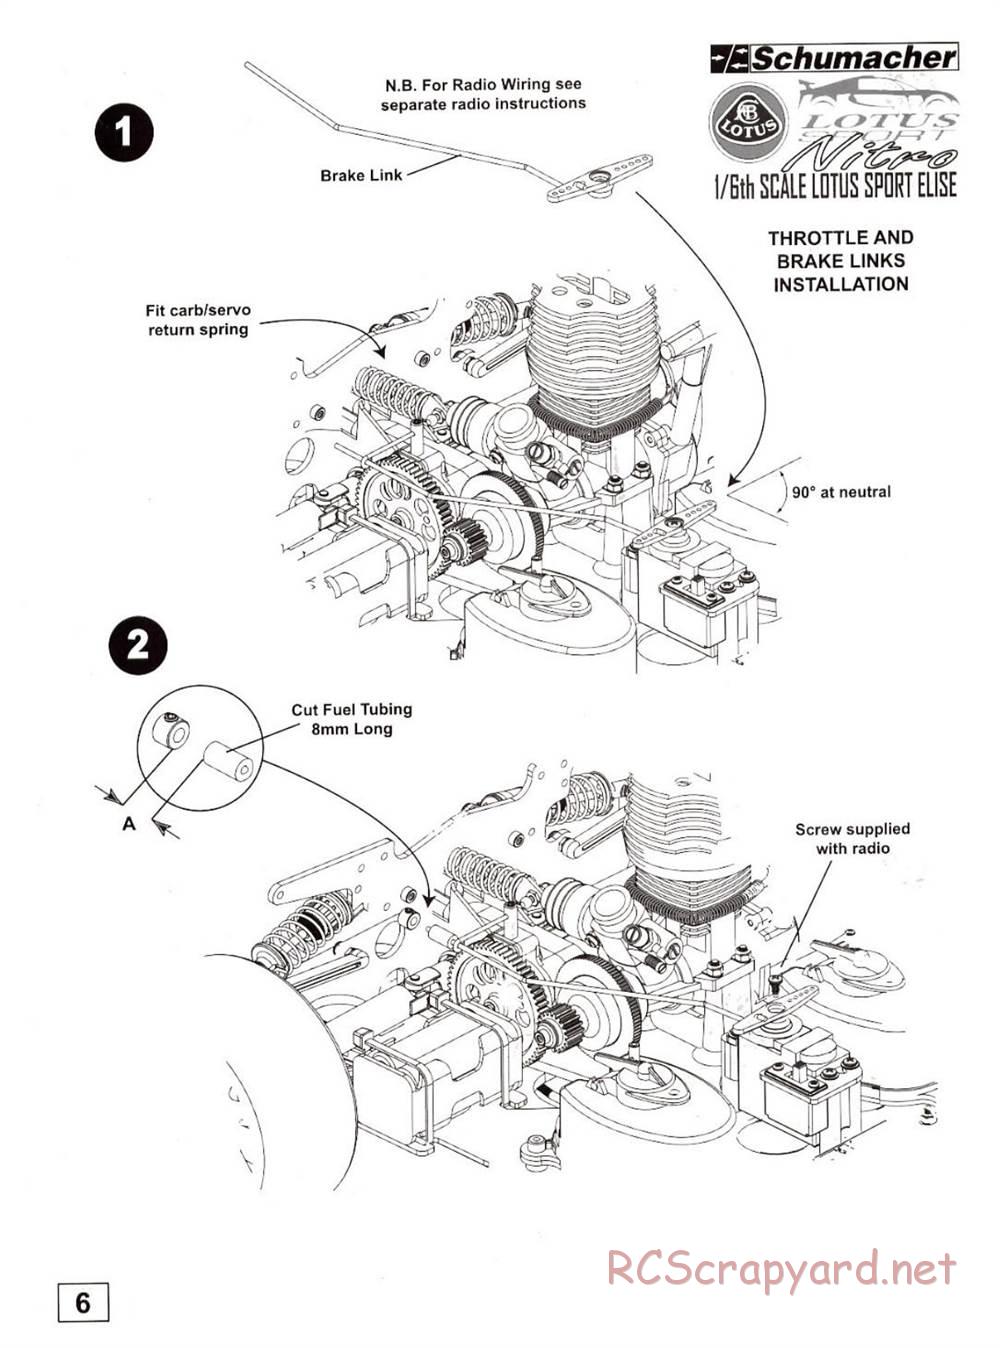 Schumacher - Big 6 Lotus Nitro - Manual - Page 23